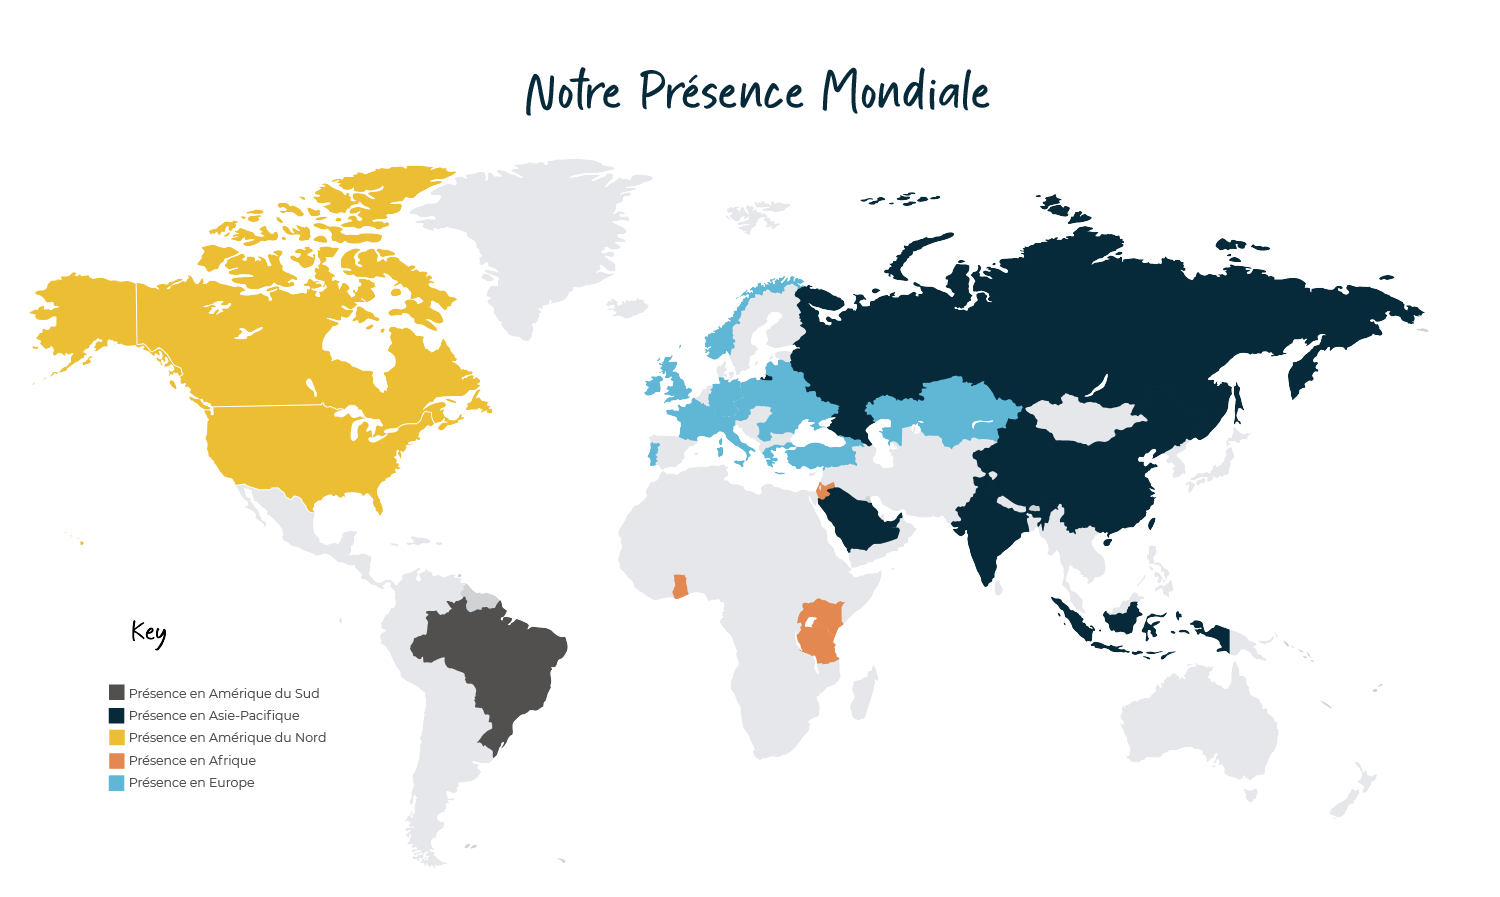 Erickson World Map Notre Presence Mondiale